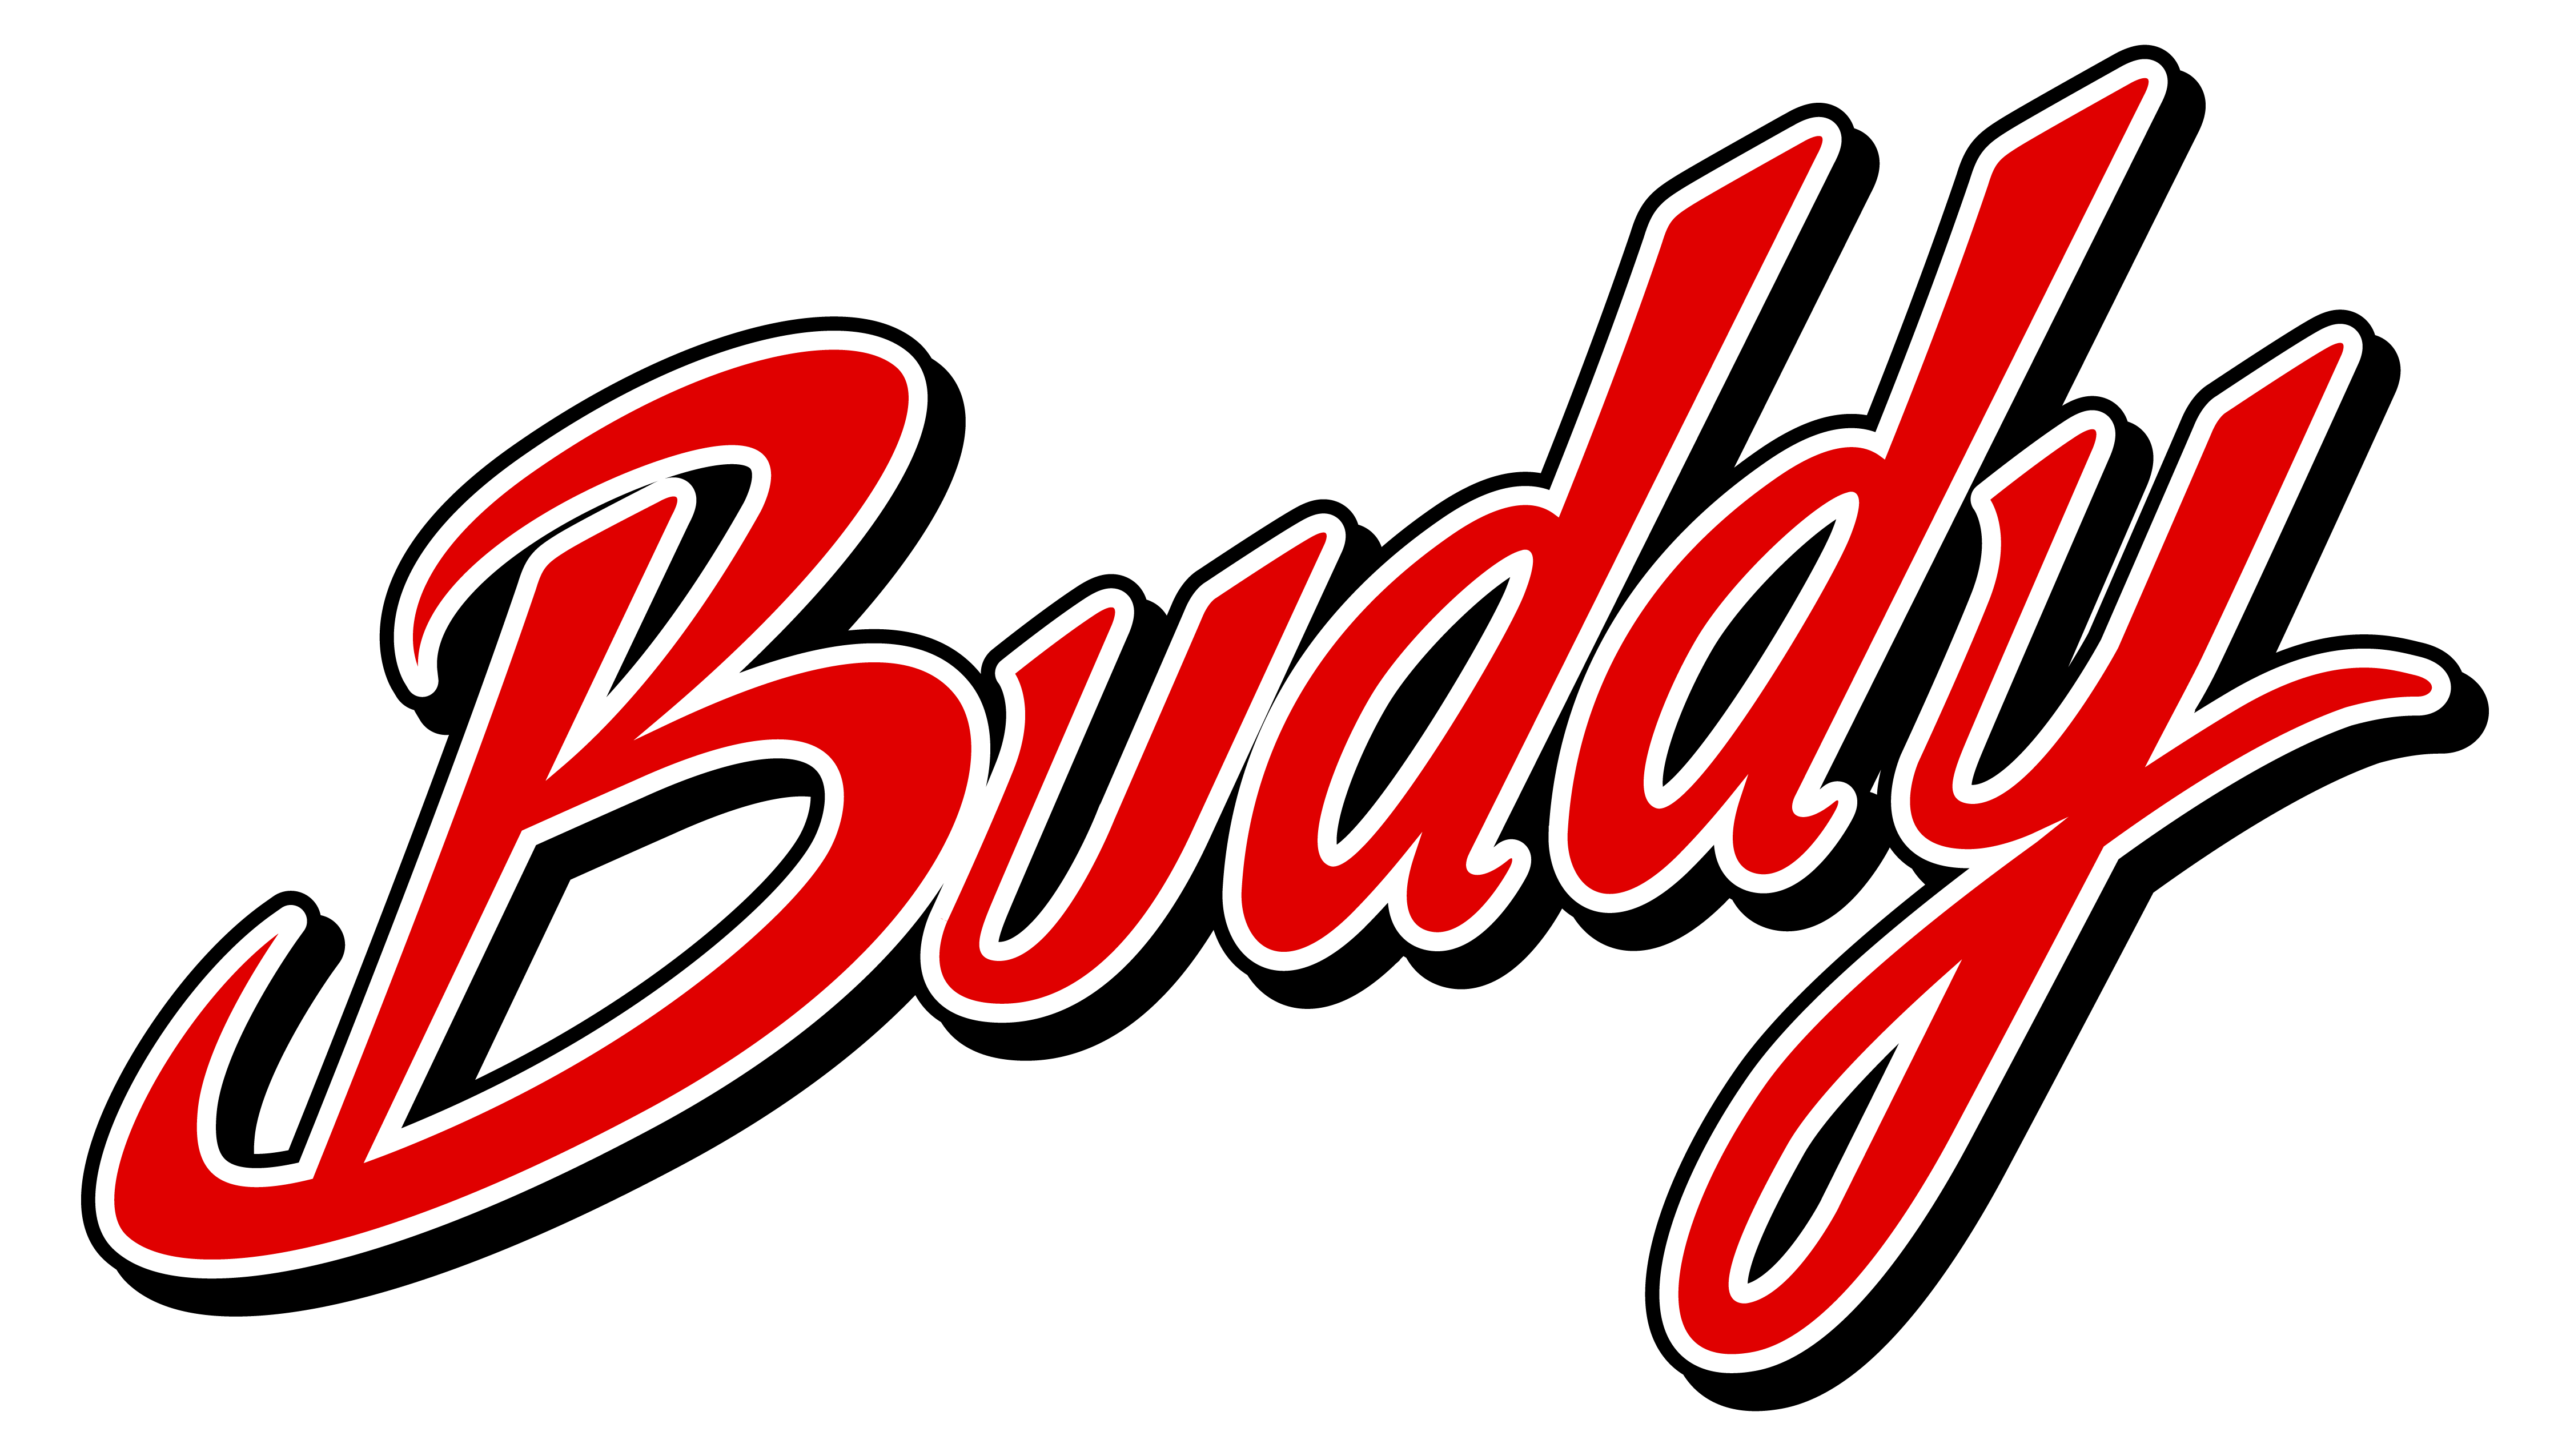 Genuine buddy logo - Burton Motorsports